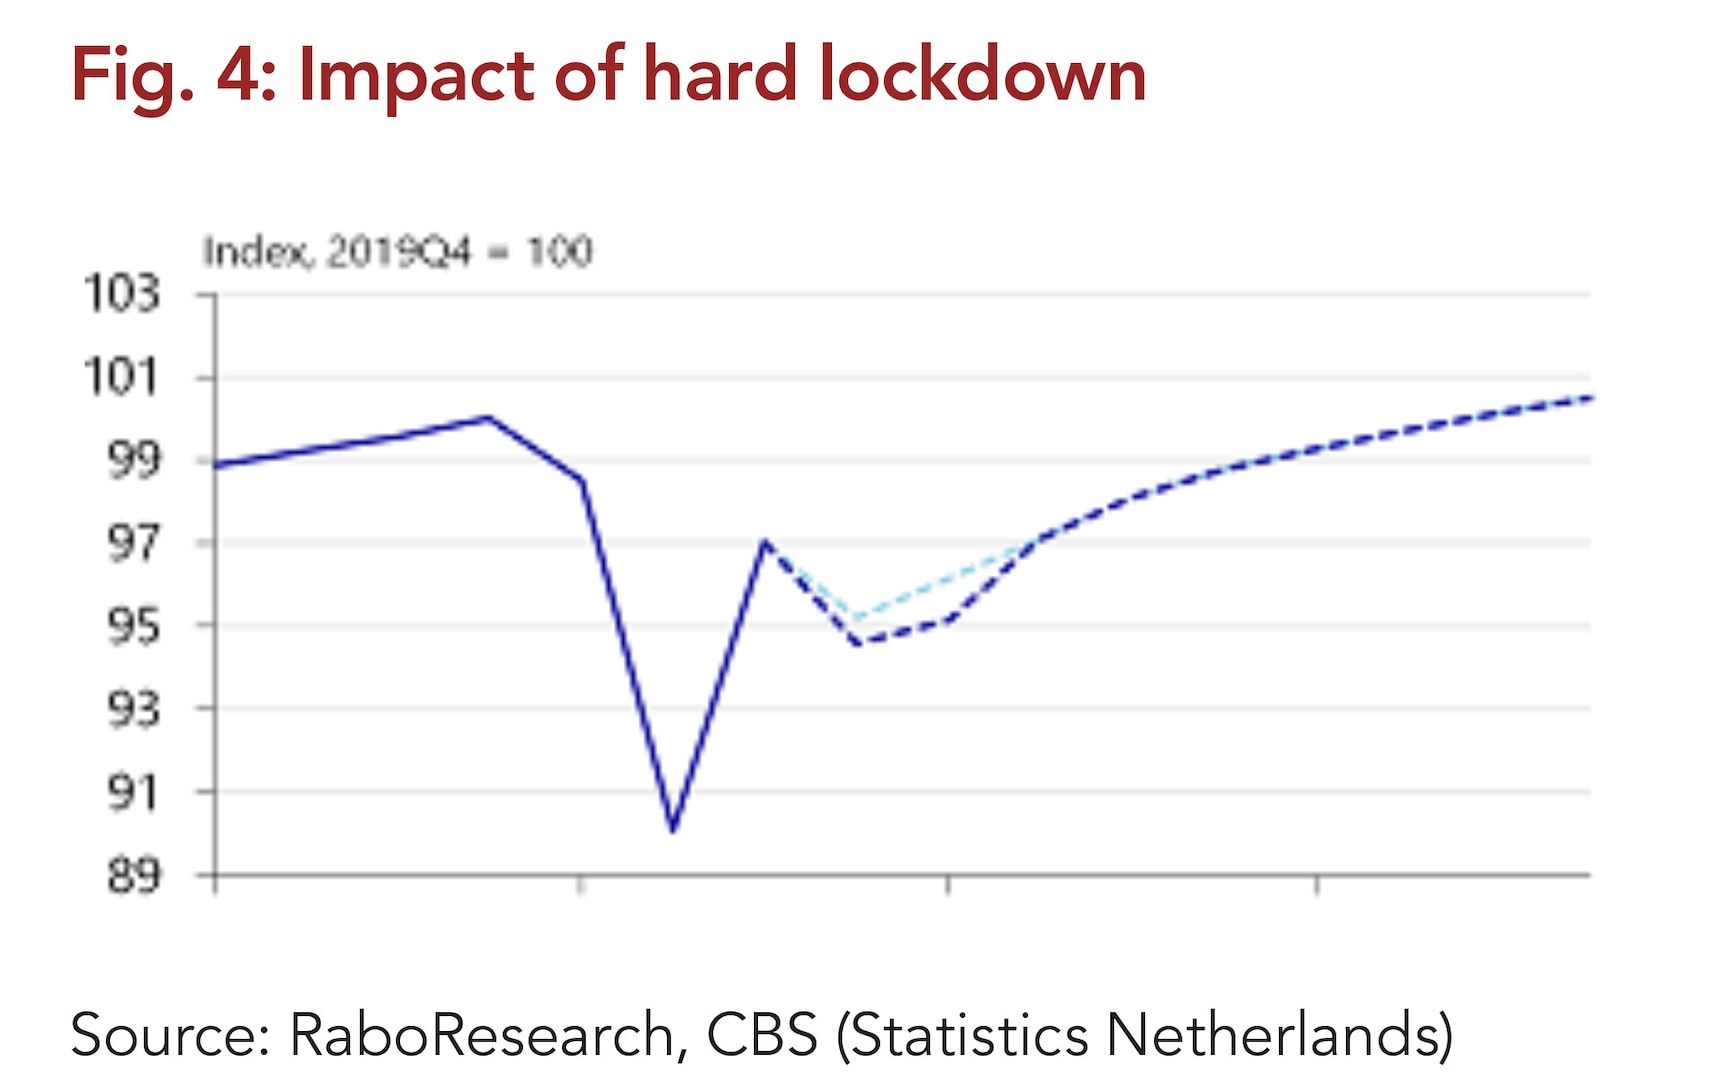 Figure 4. Impact of hard lockdown